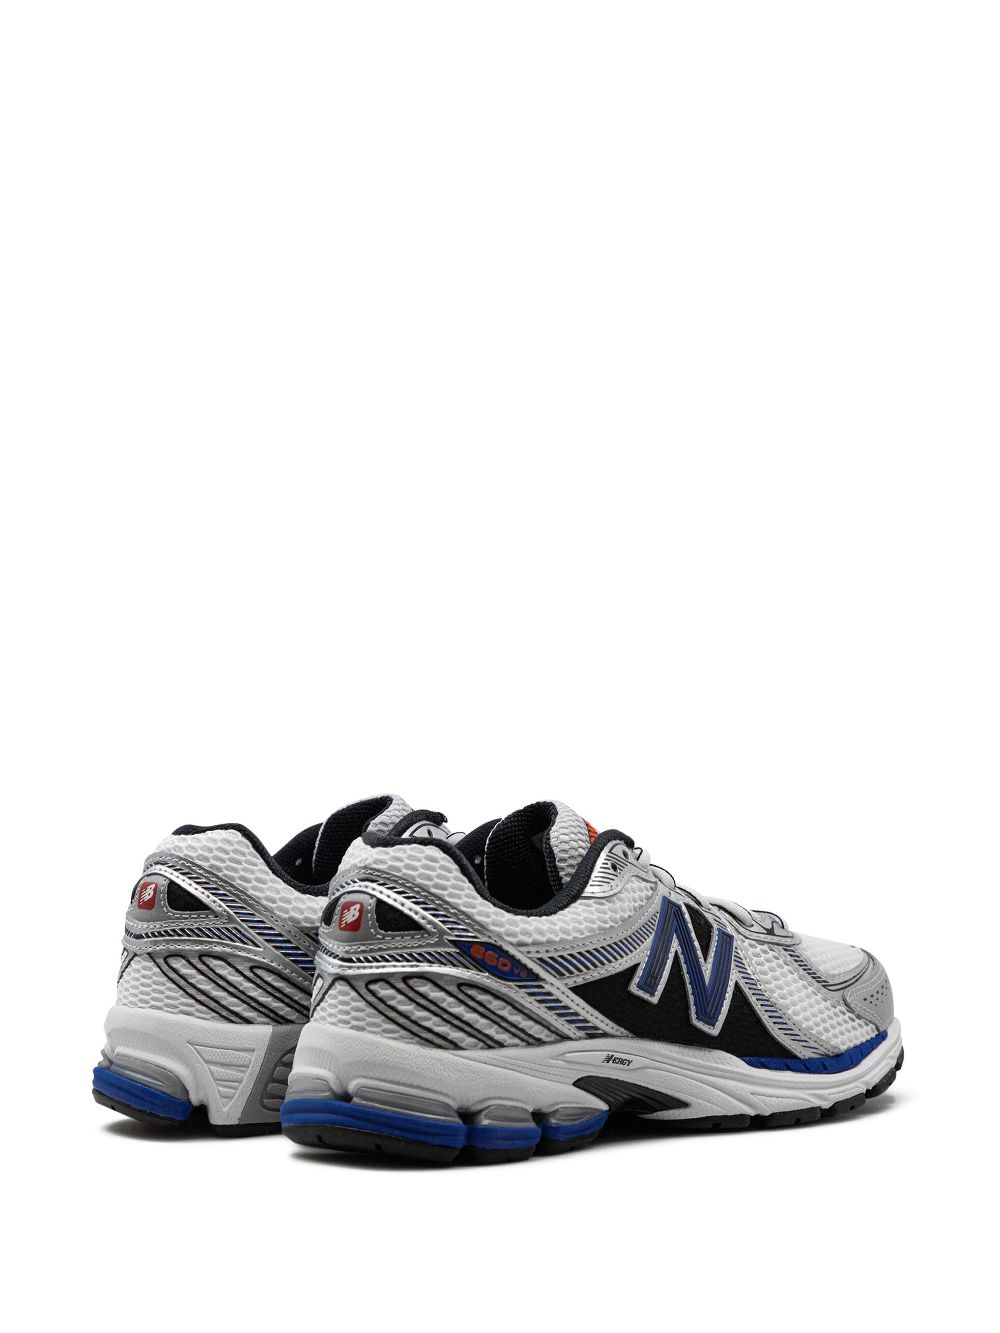 New Balance 860 V2 sneakers Grey